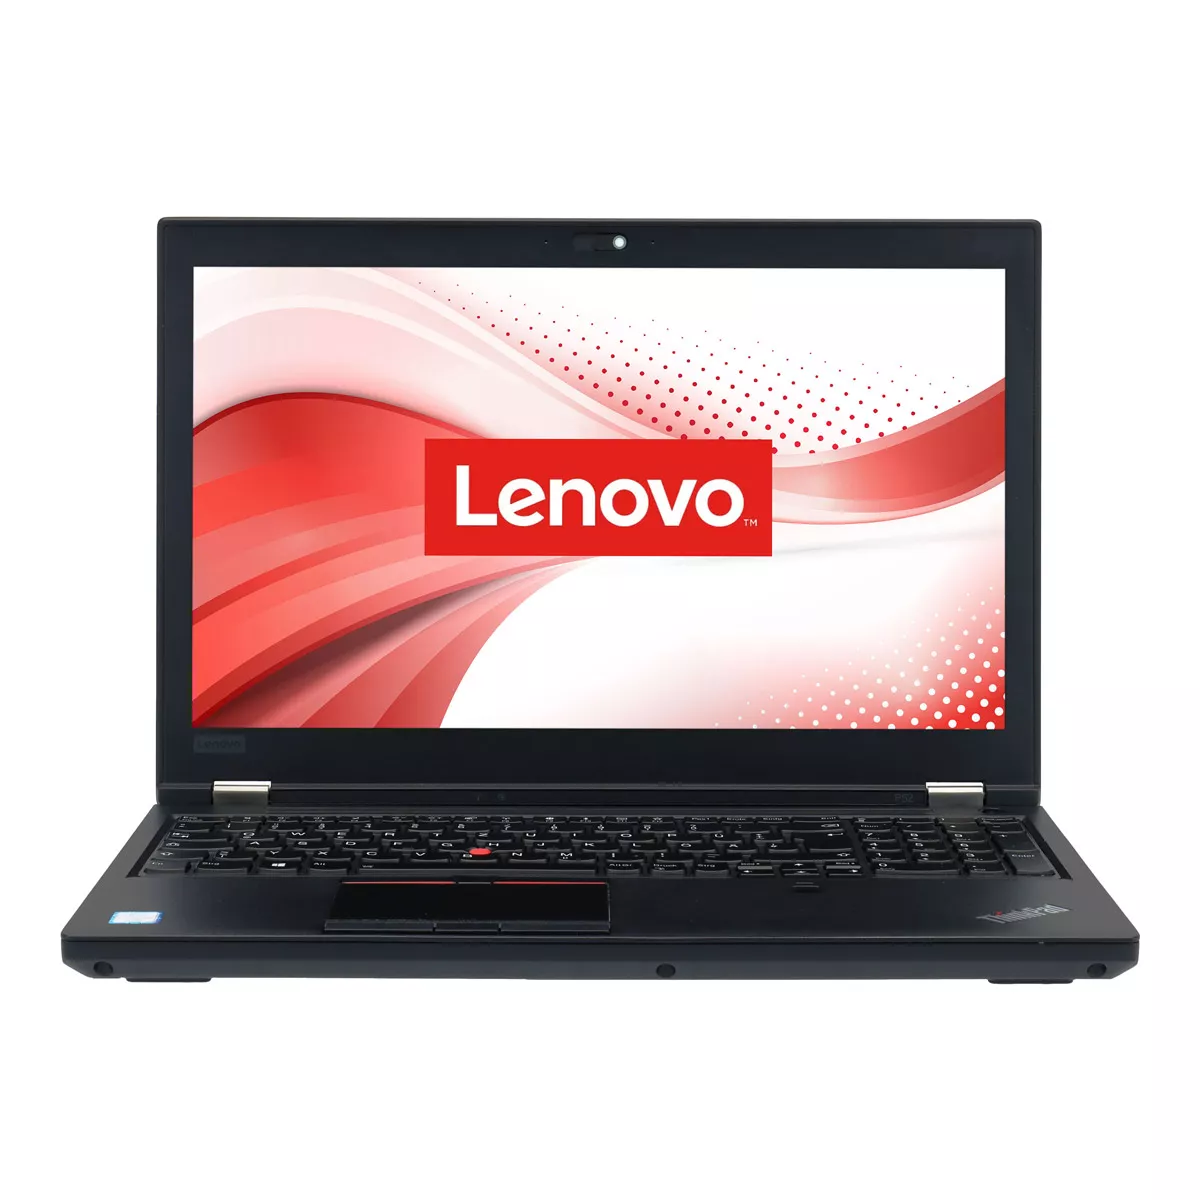 Lenovo ThinkPad P52 Core i7 8750H Full-HD nVidia Quadro P1000M 500 GB M.2 SSD Webcam A